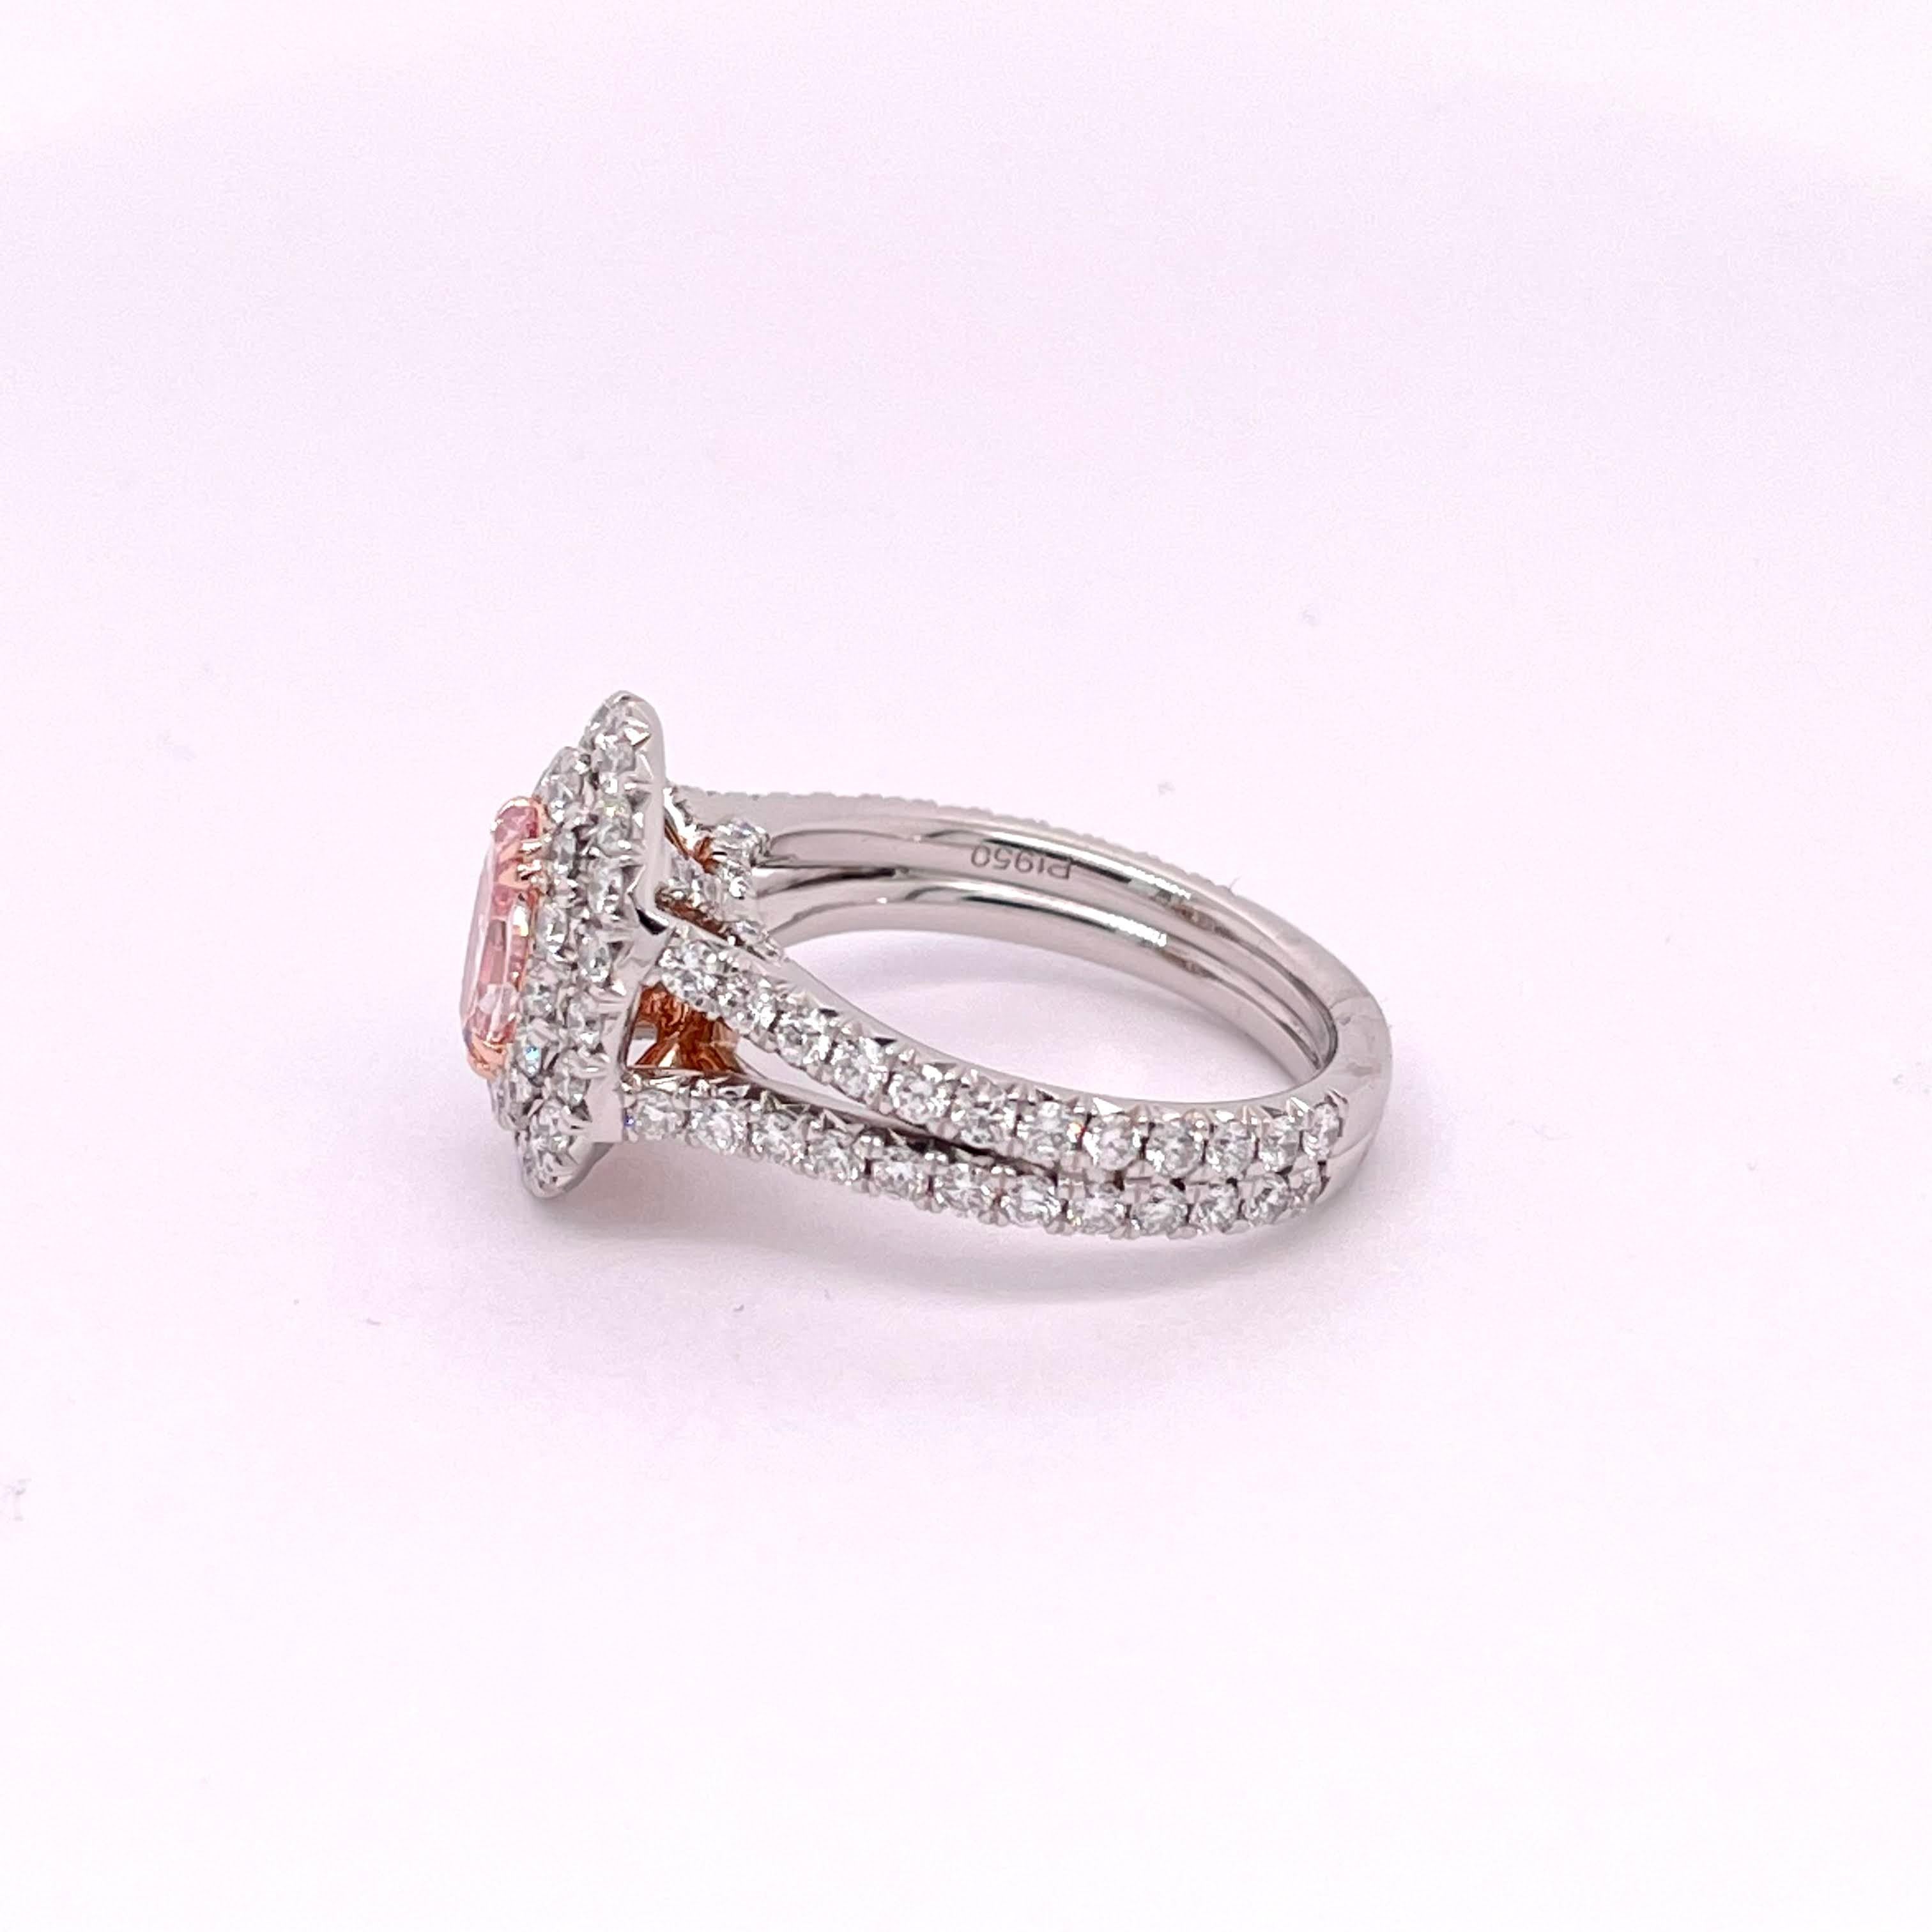 Oval Cut GIA Certified 0.67 Carat Fancy Intense Pink Diamond Ring For Sale